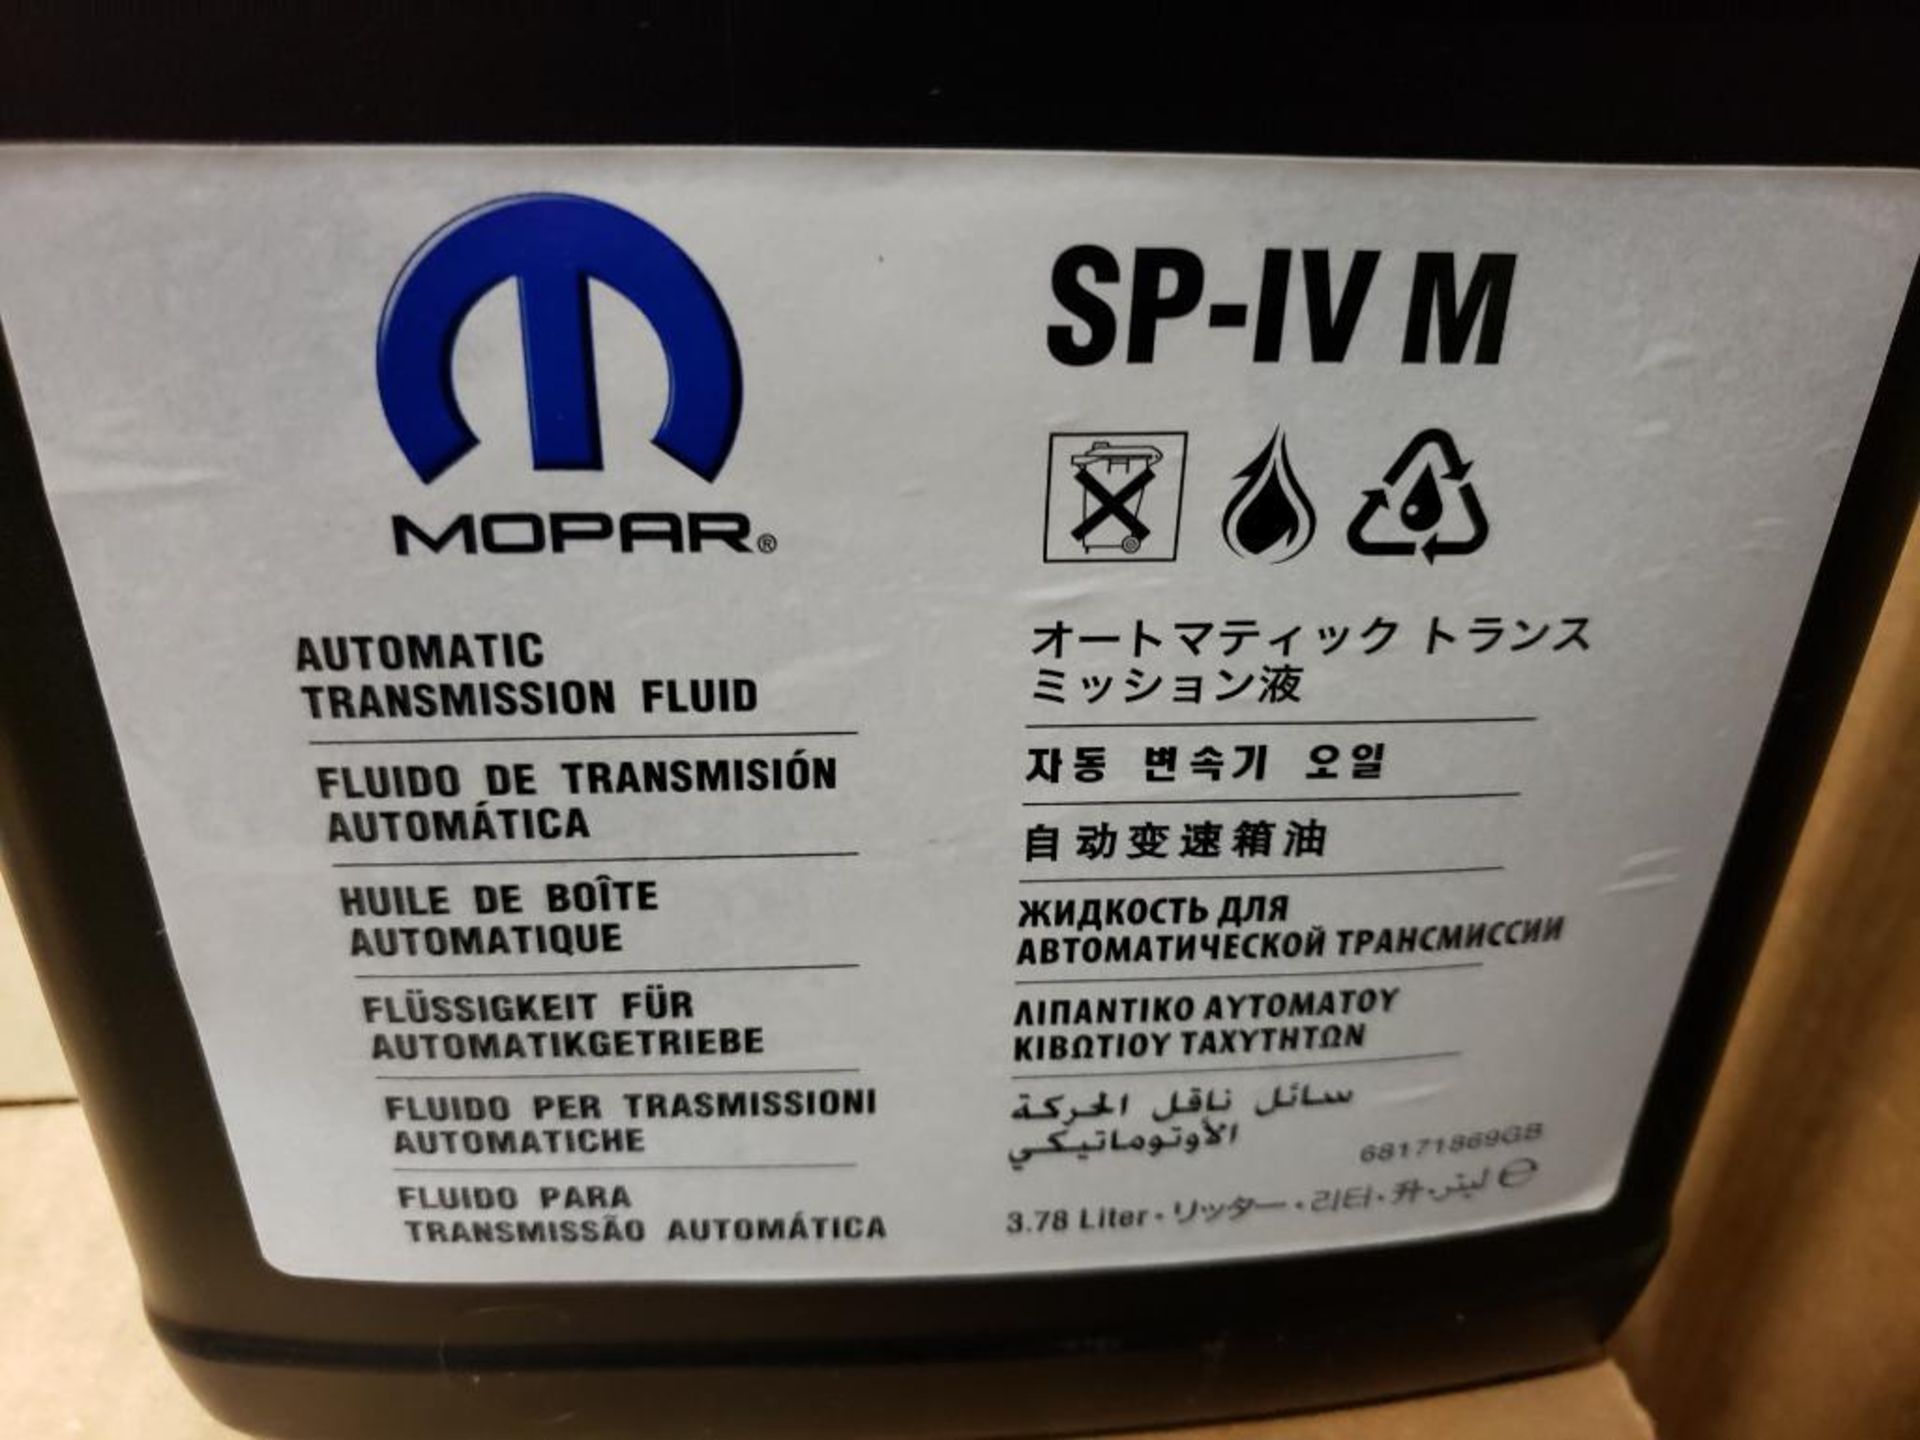 Qty 12 - MOPAR SP-IV M automatic transmission fluid bottle. New in box. (3 Boxes of 4 Bottles each). - Image 4 of 4